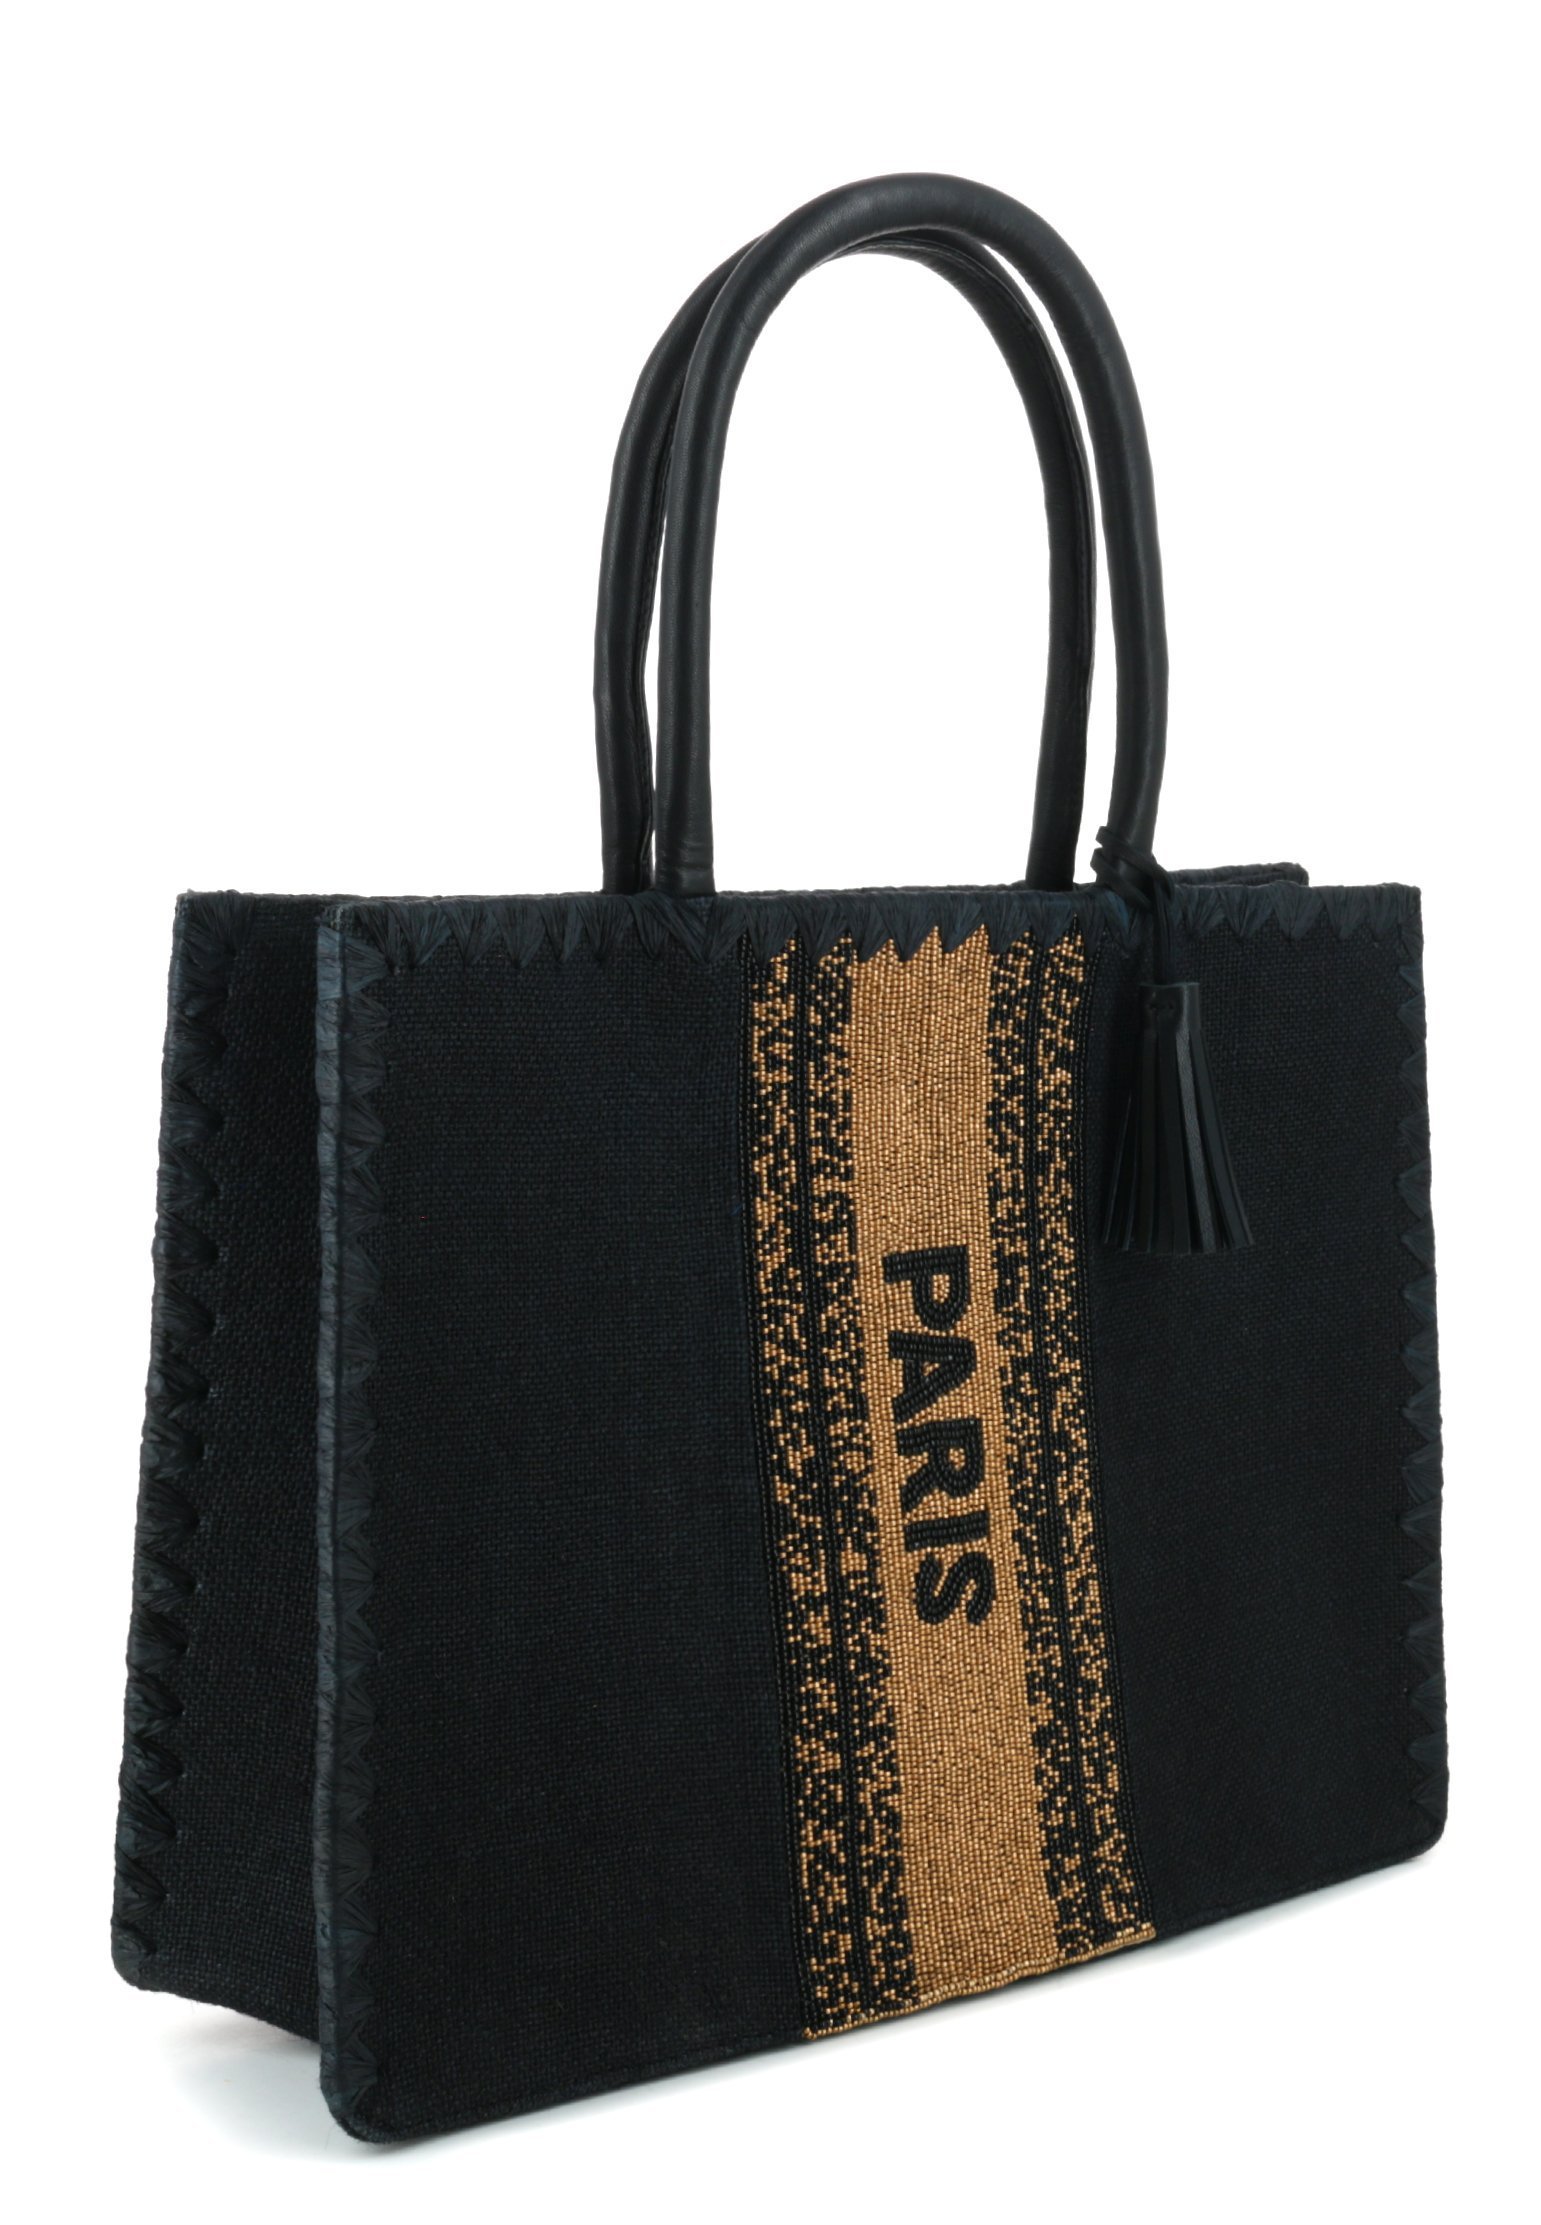 Bag DE SIENA Color: black (Code: 2332) in online store Allure